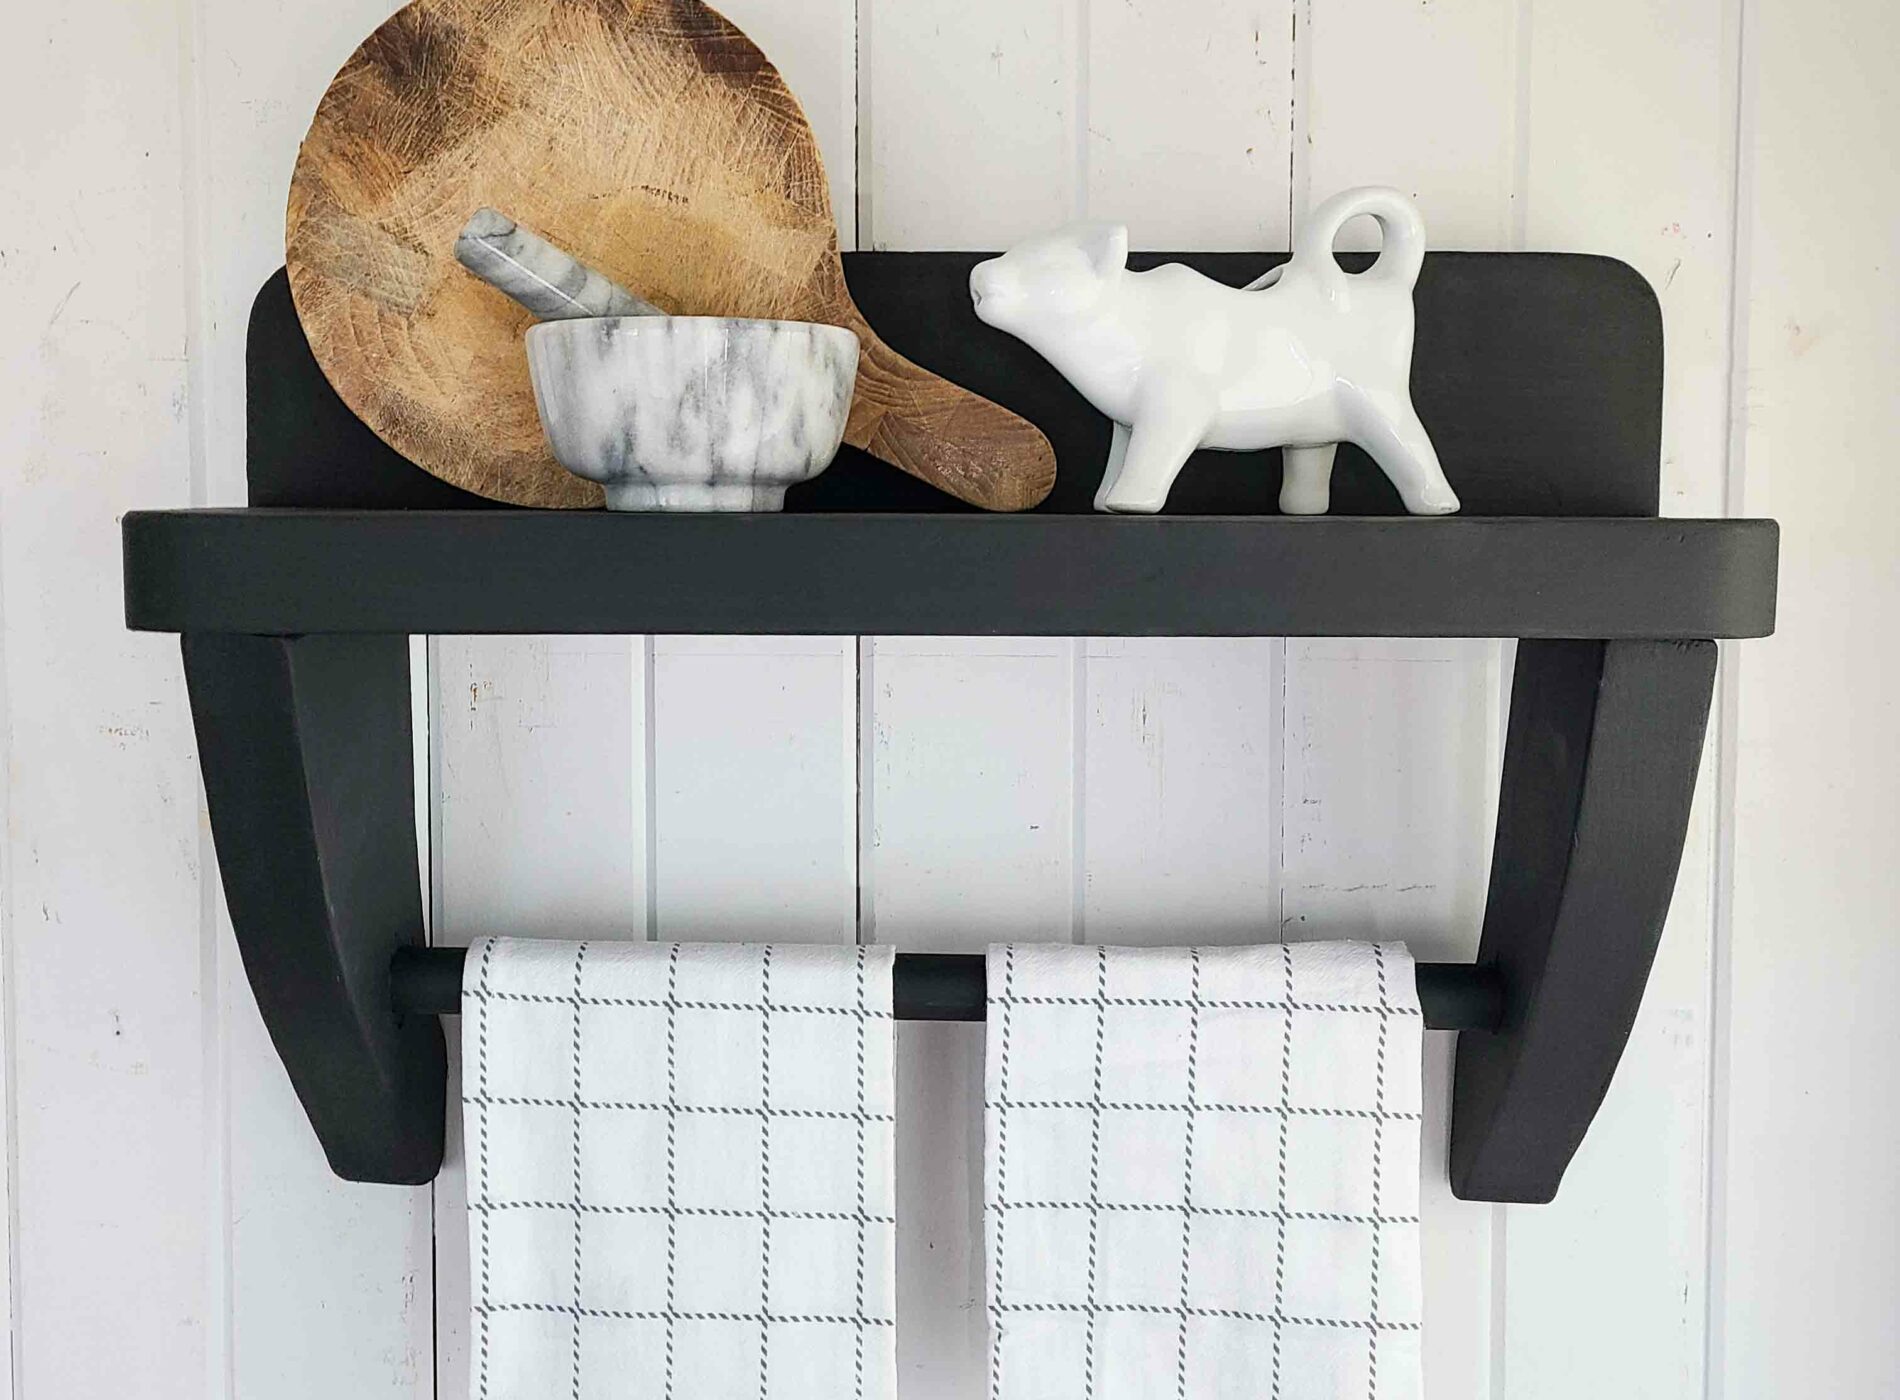 Farmhouse Shelf with Towel Rack available at Prodigal Pieces | shop.prodigalpieces.com #prodigalpieces